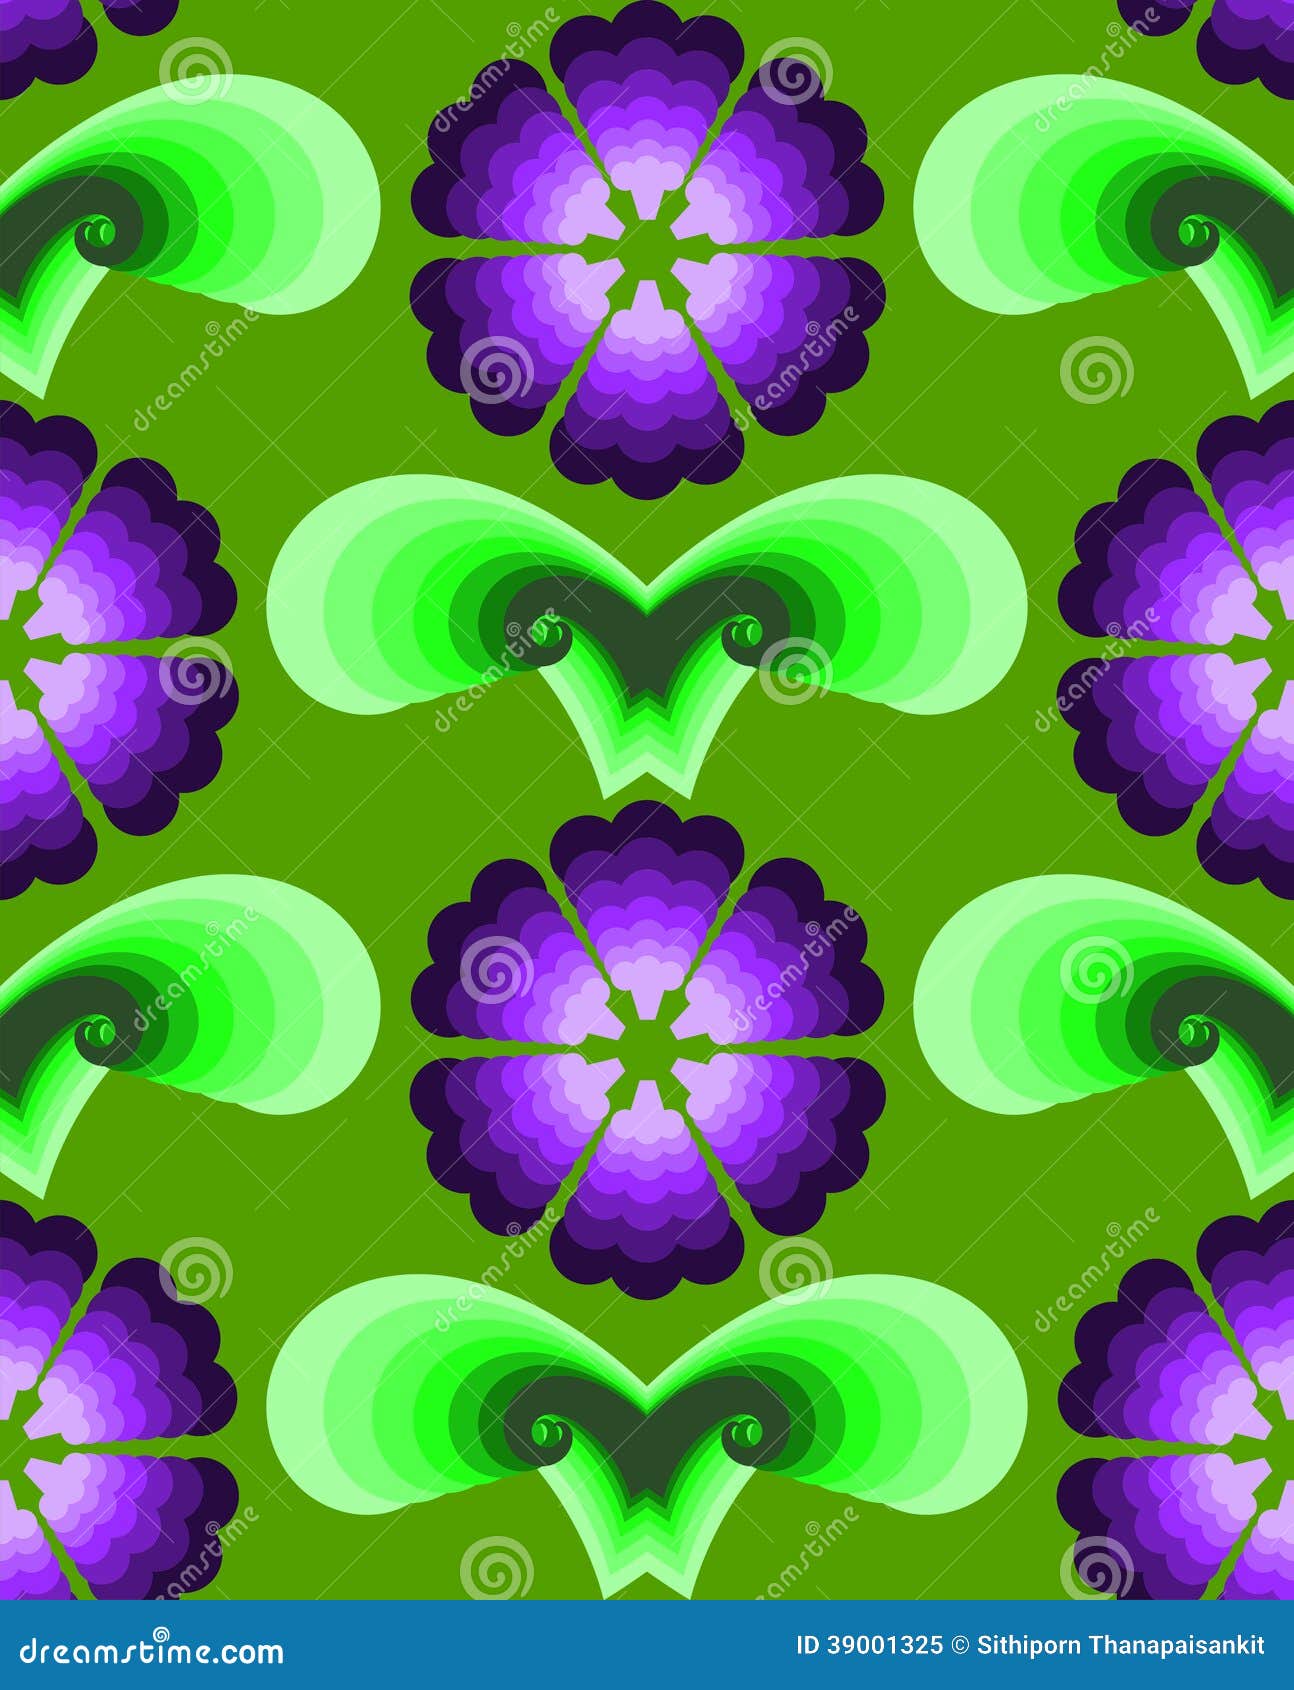 Violet flower pattern stock vector. Illustration of purple - 39001325